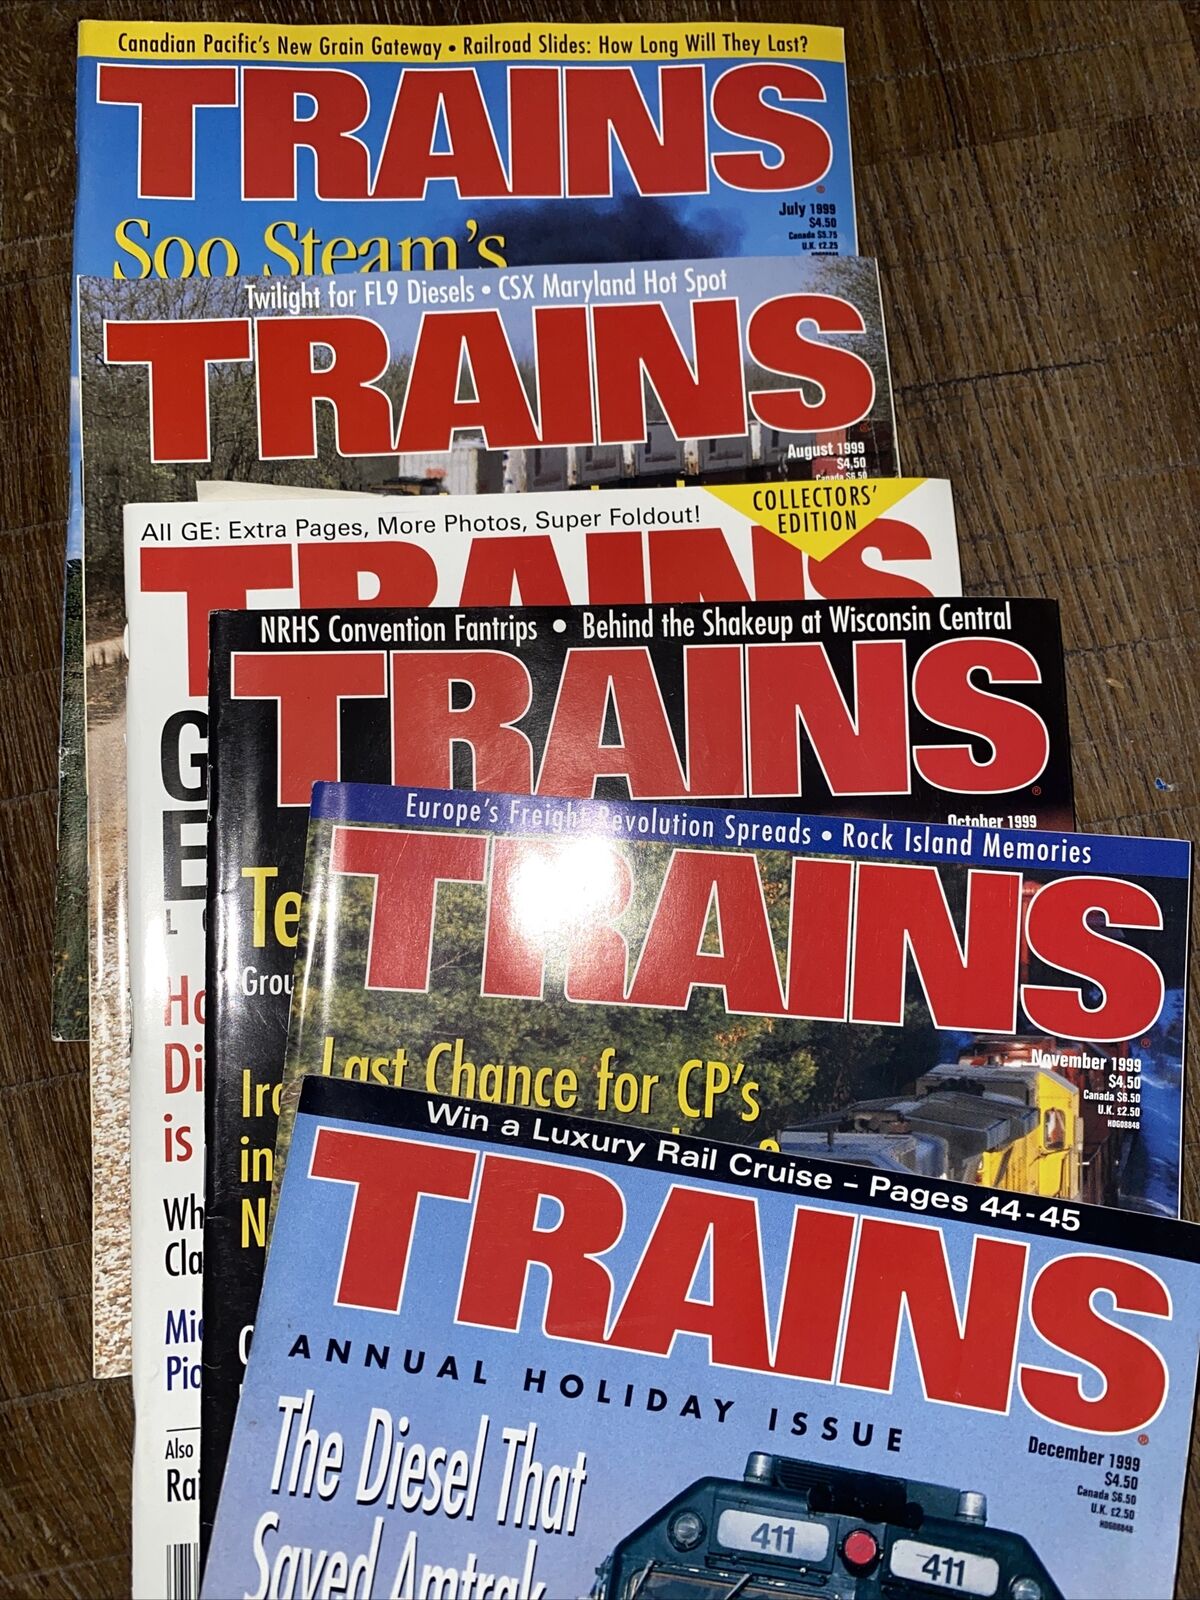 Trains 1999 Magazine 6 Issues July Aug Sept Oct Nov Dec Magazines 